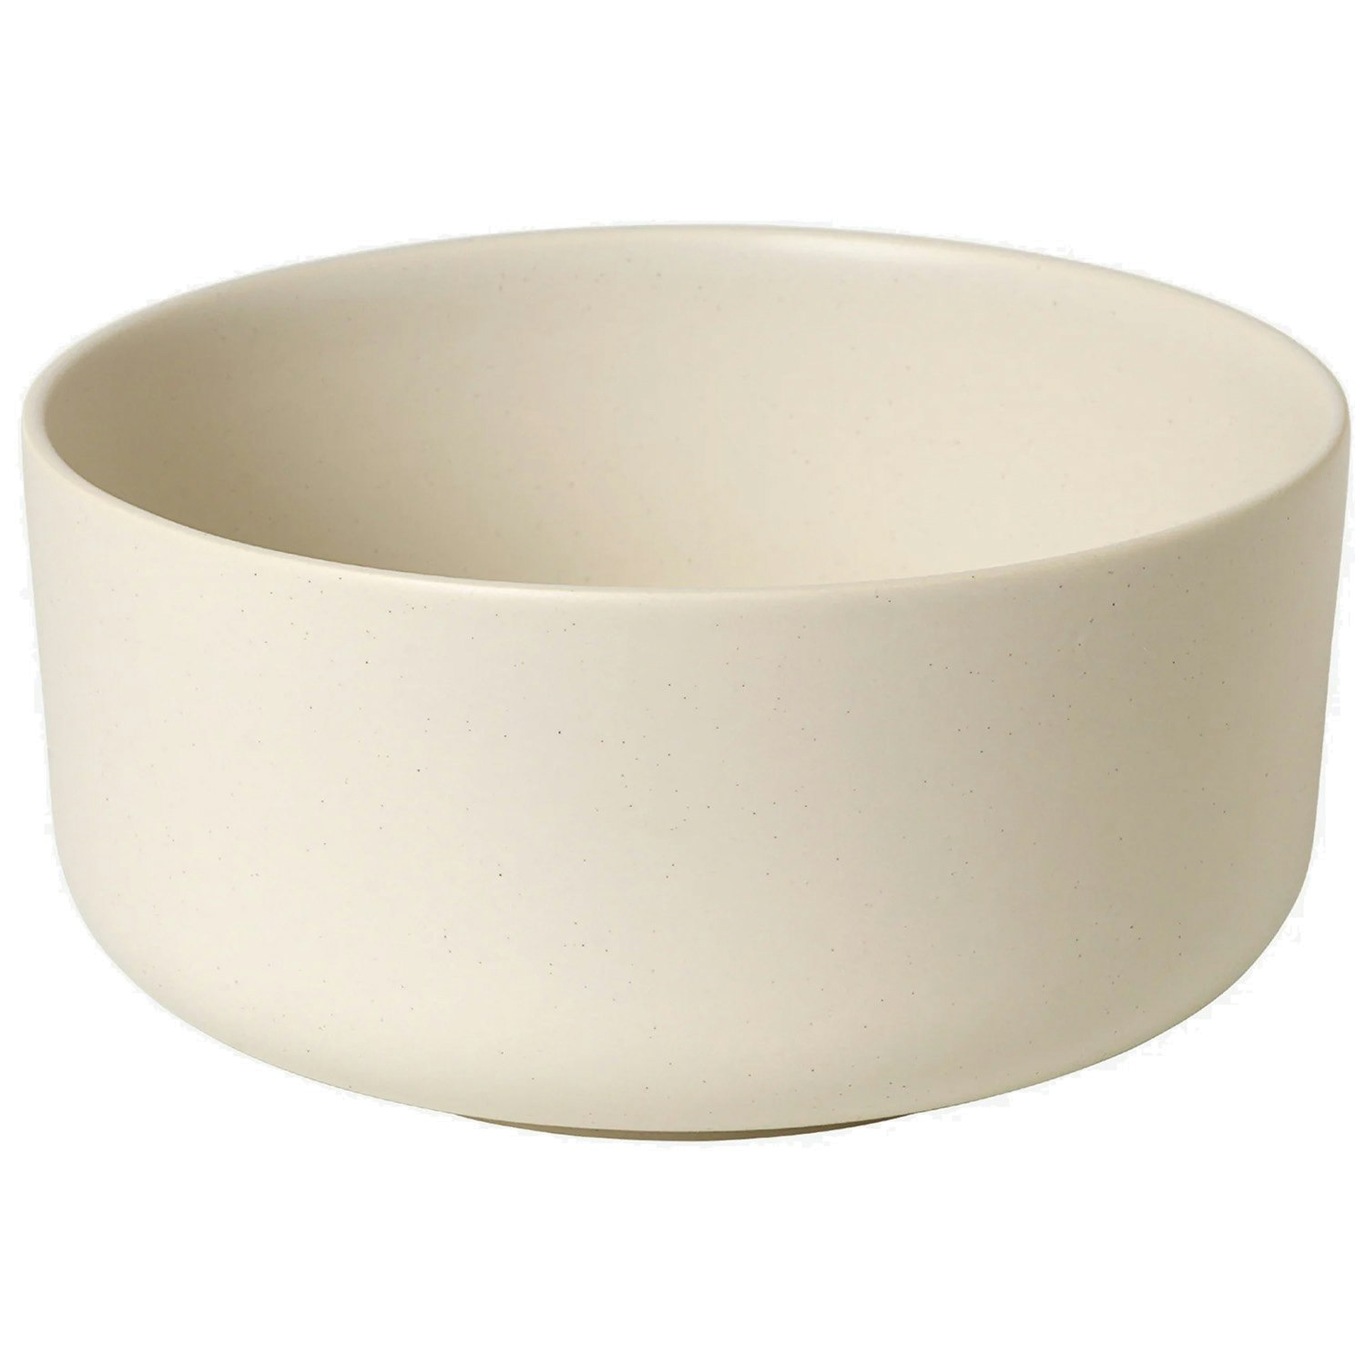 Ceramic Pisu Schüssel Ø24 cm, Vanilla White